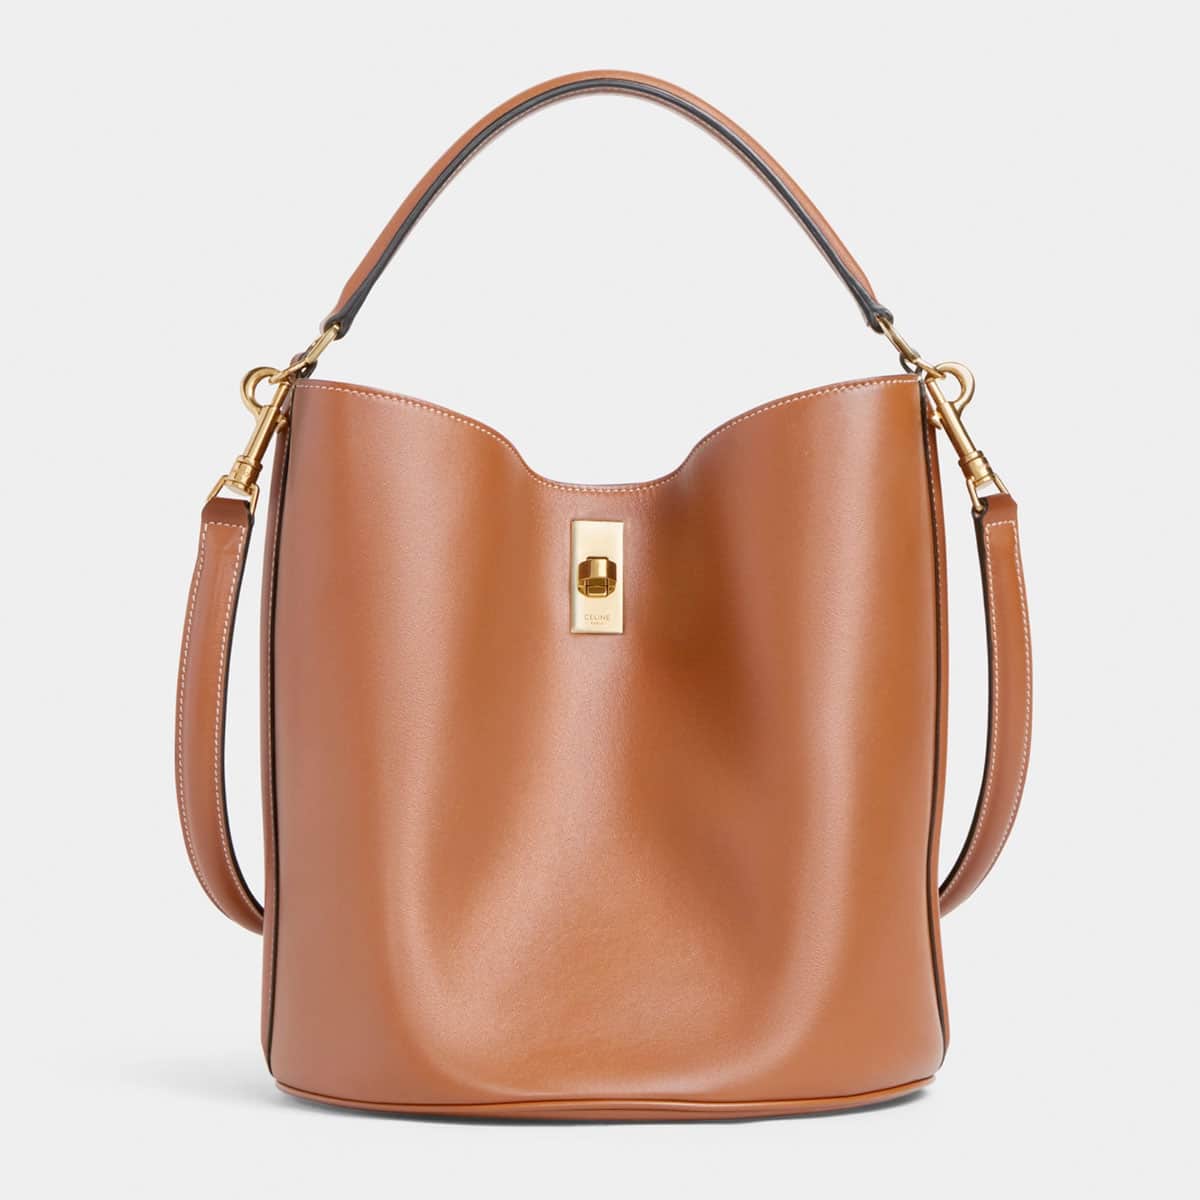 Louis Vuitton to Release $54,500 Croc Bag for Fall 2014 - PurseBlog